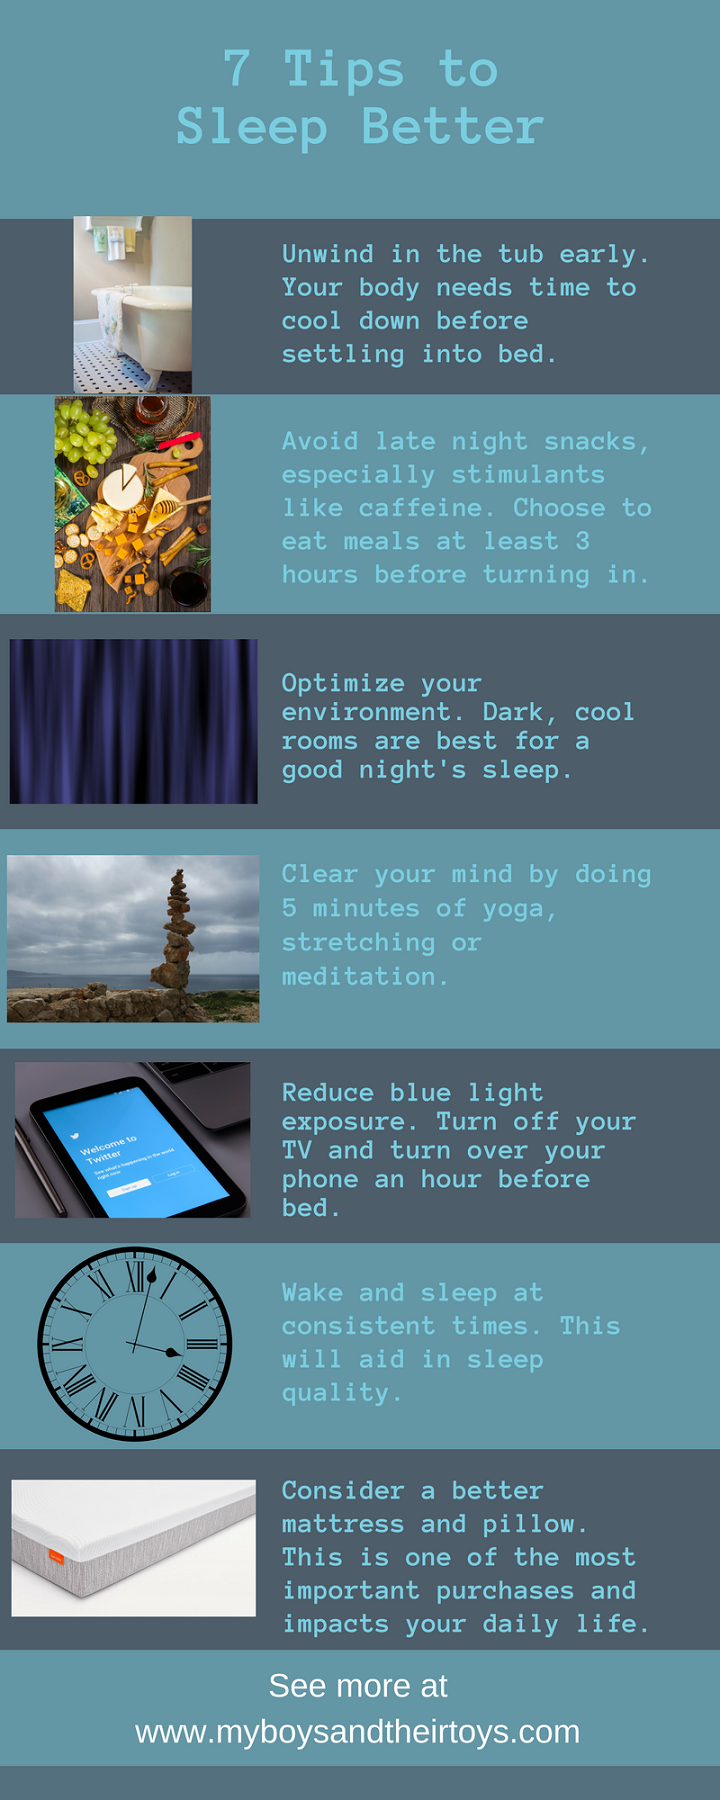 7 tips to sleep better